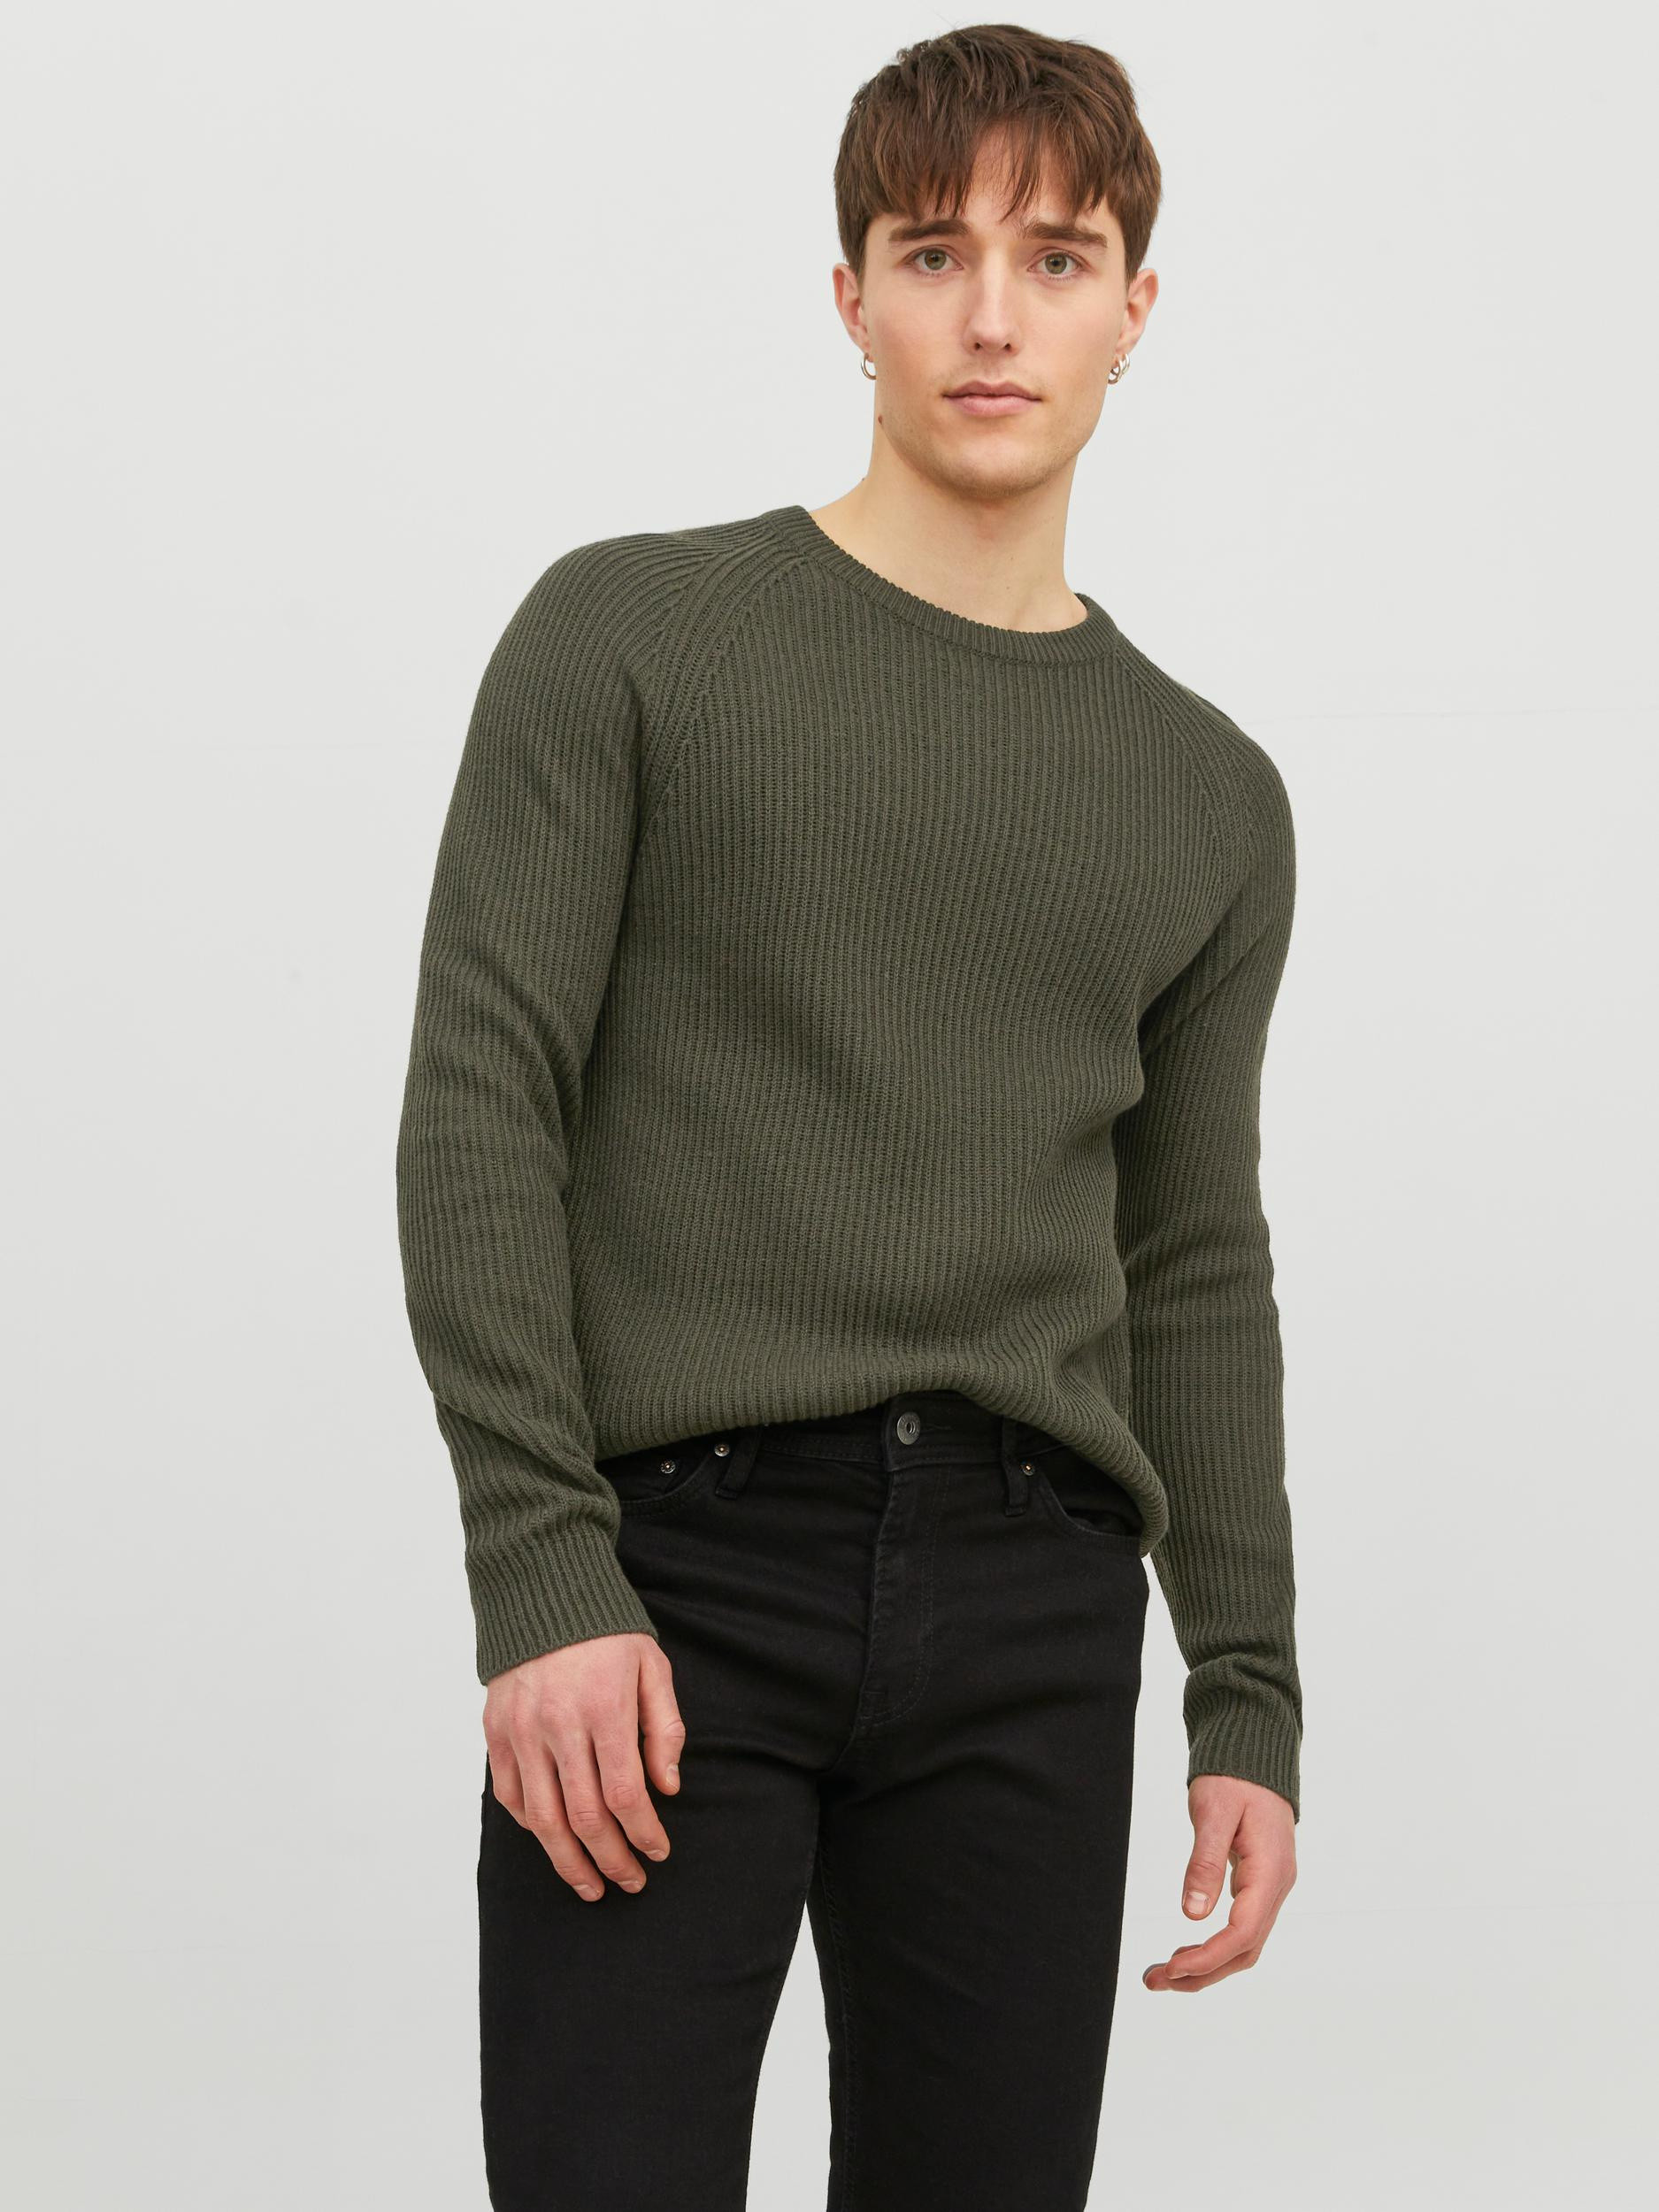 Jack & Jones Ribbed Knitted Sweater, Dark Green, large image number 4